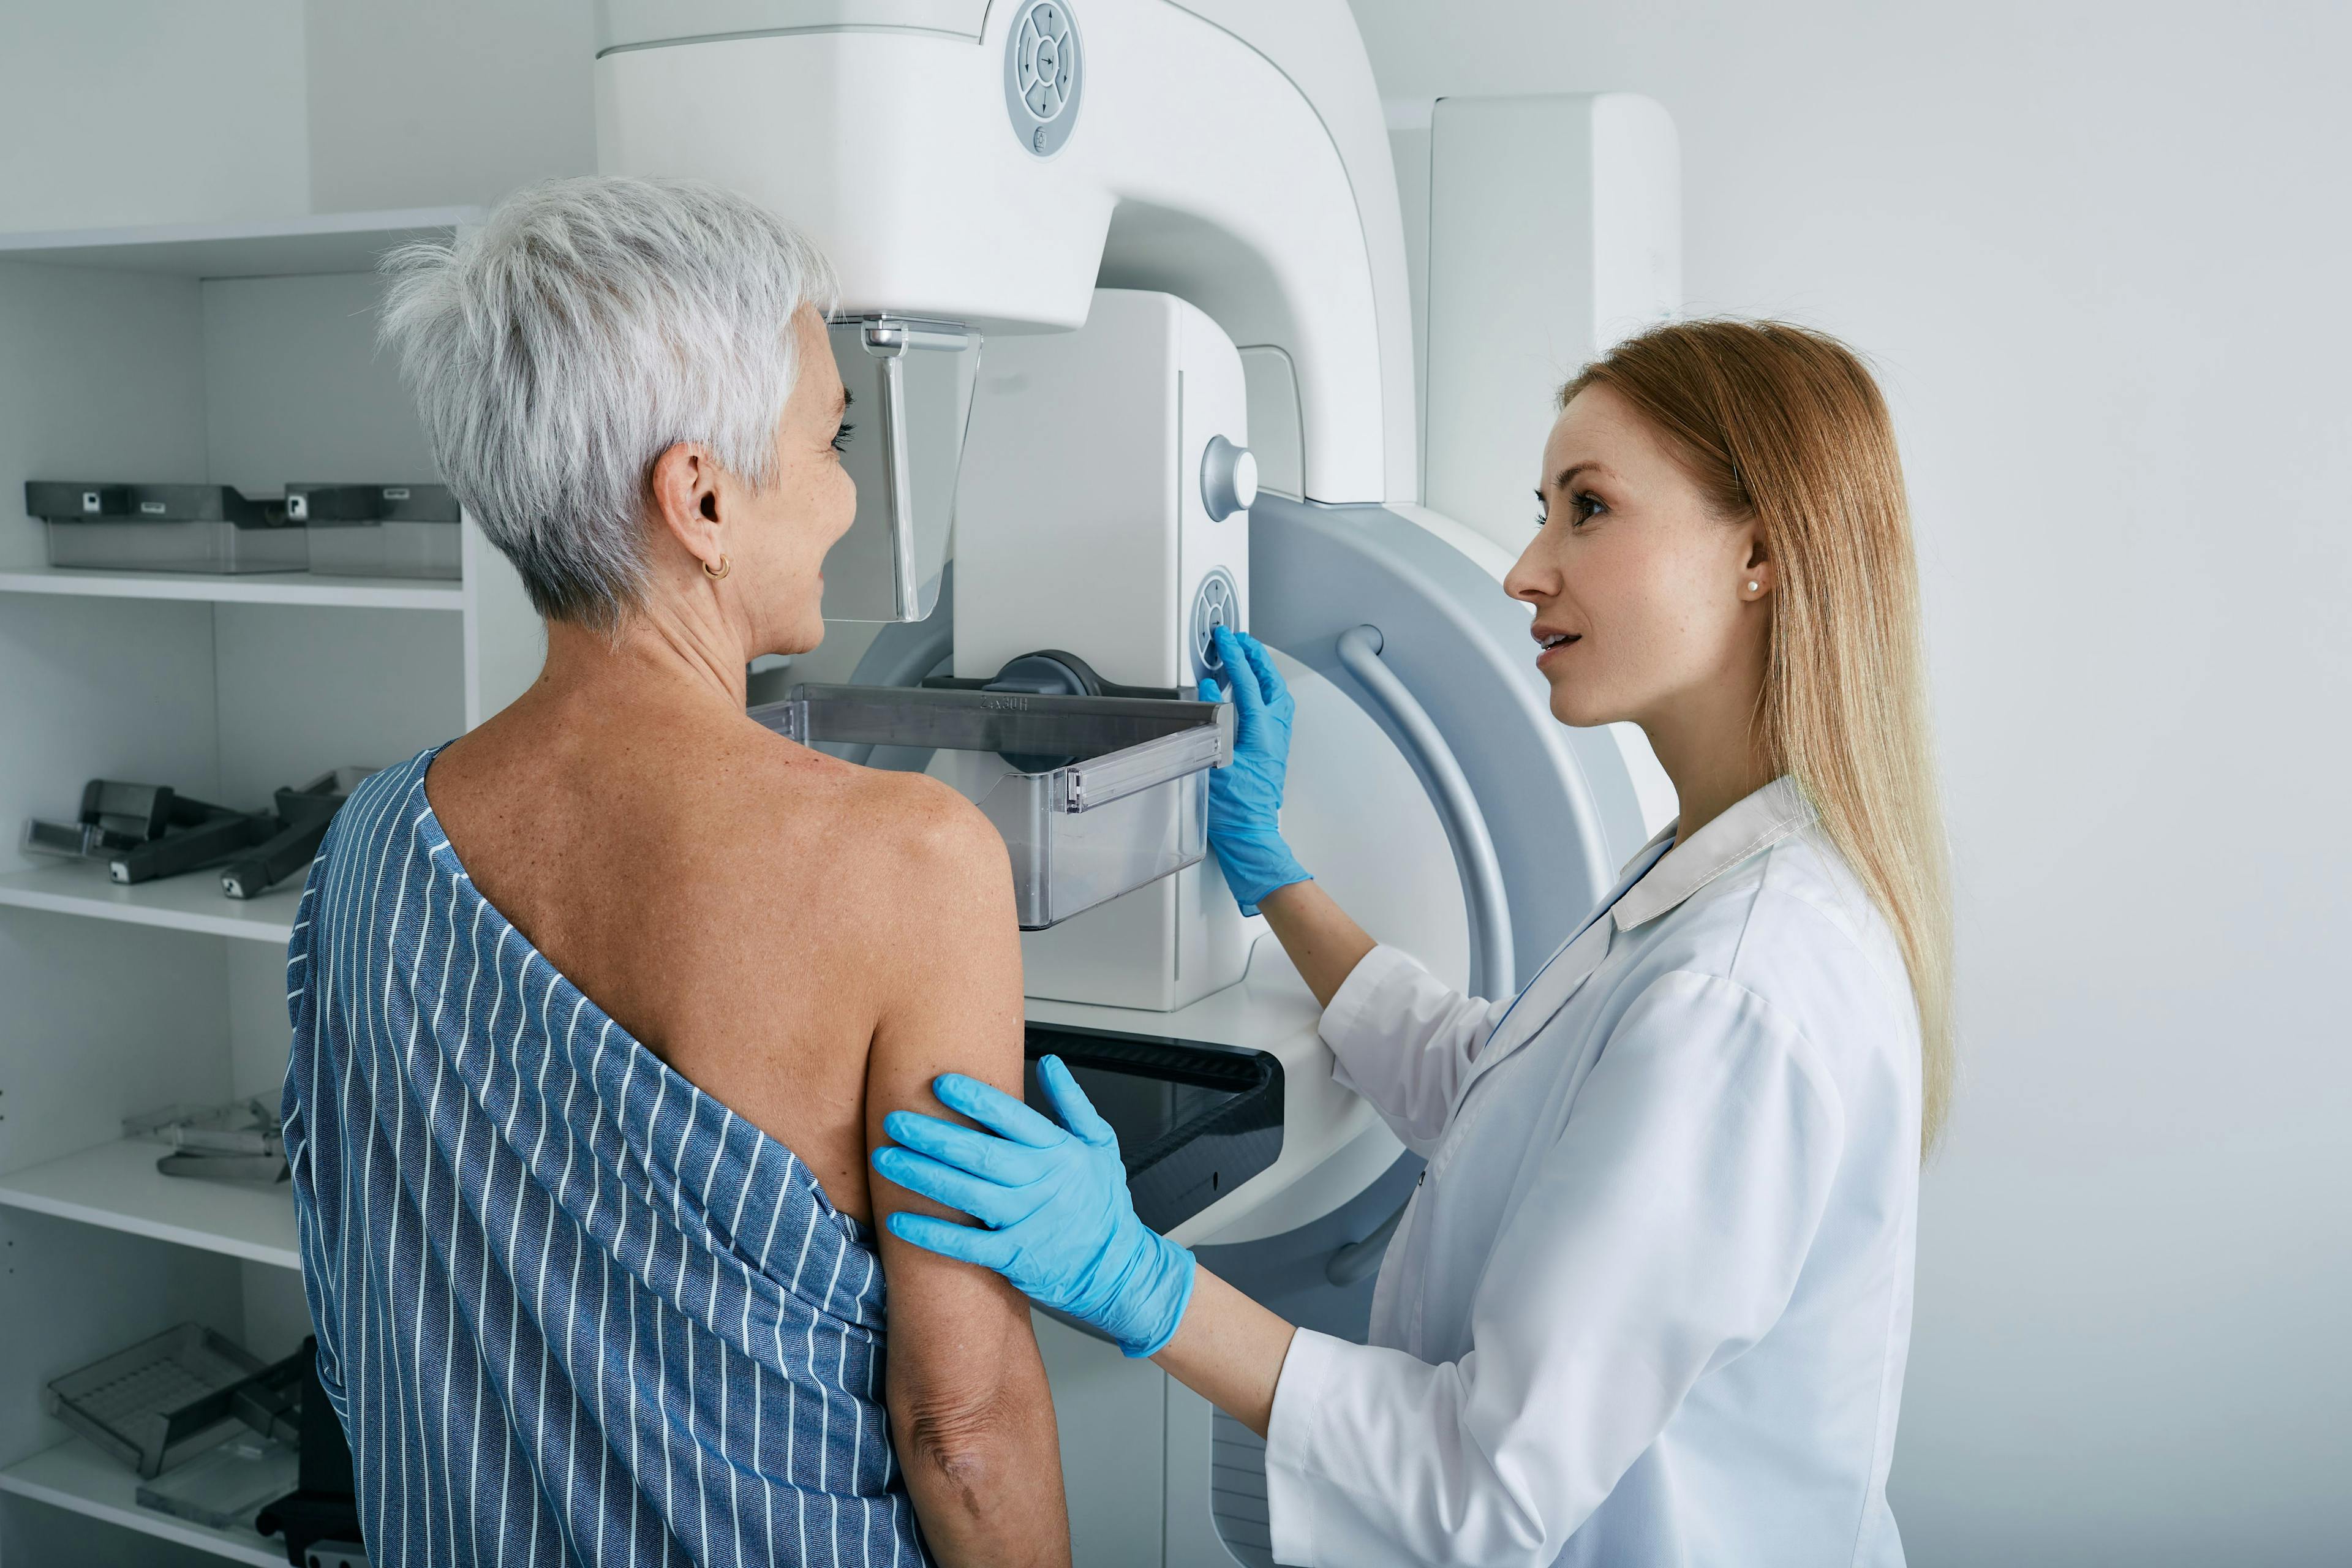 woman undergoing mammography | Image credit: Peakstock - stock.adobe.com